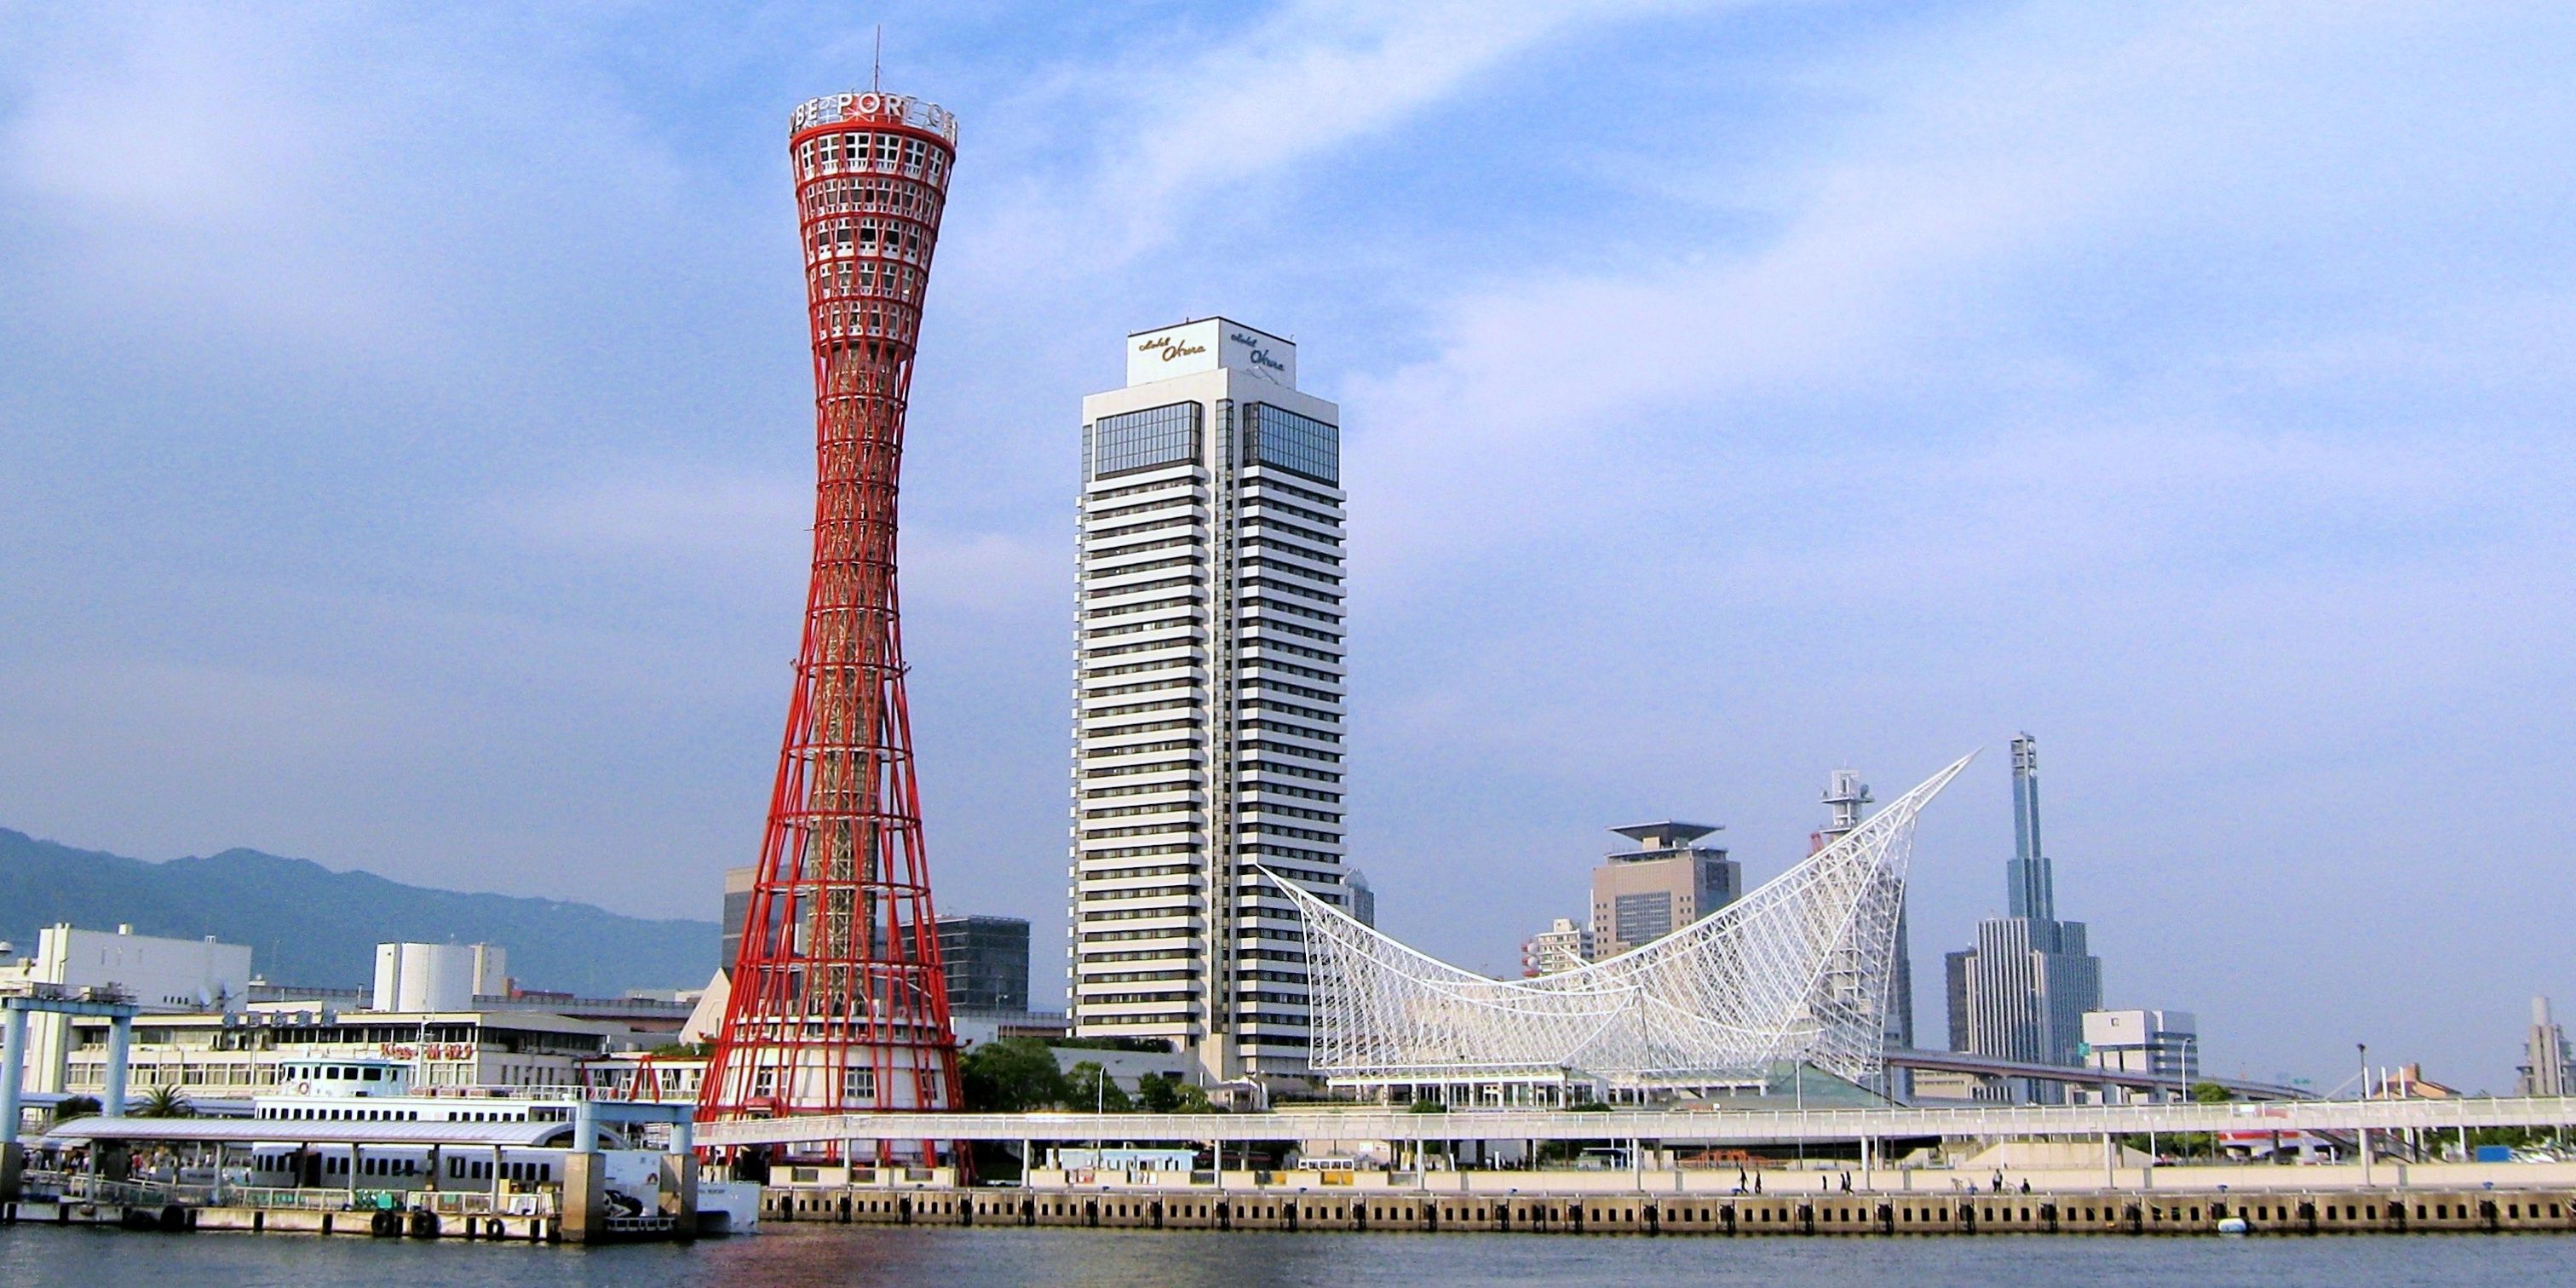 Kobe, Japan, which Olivine City in Pokemon is based on